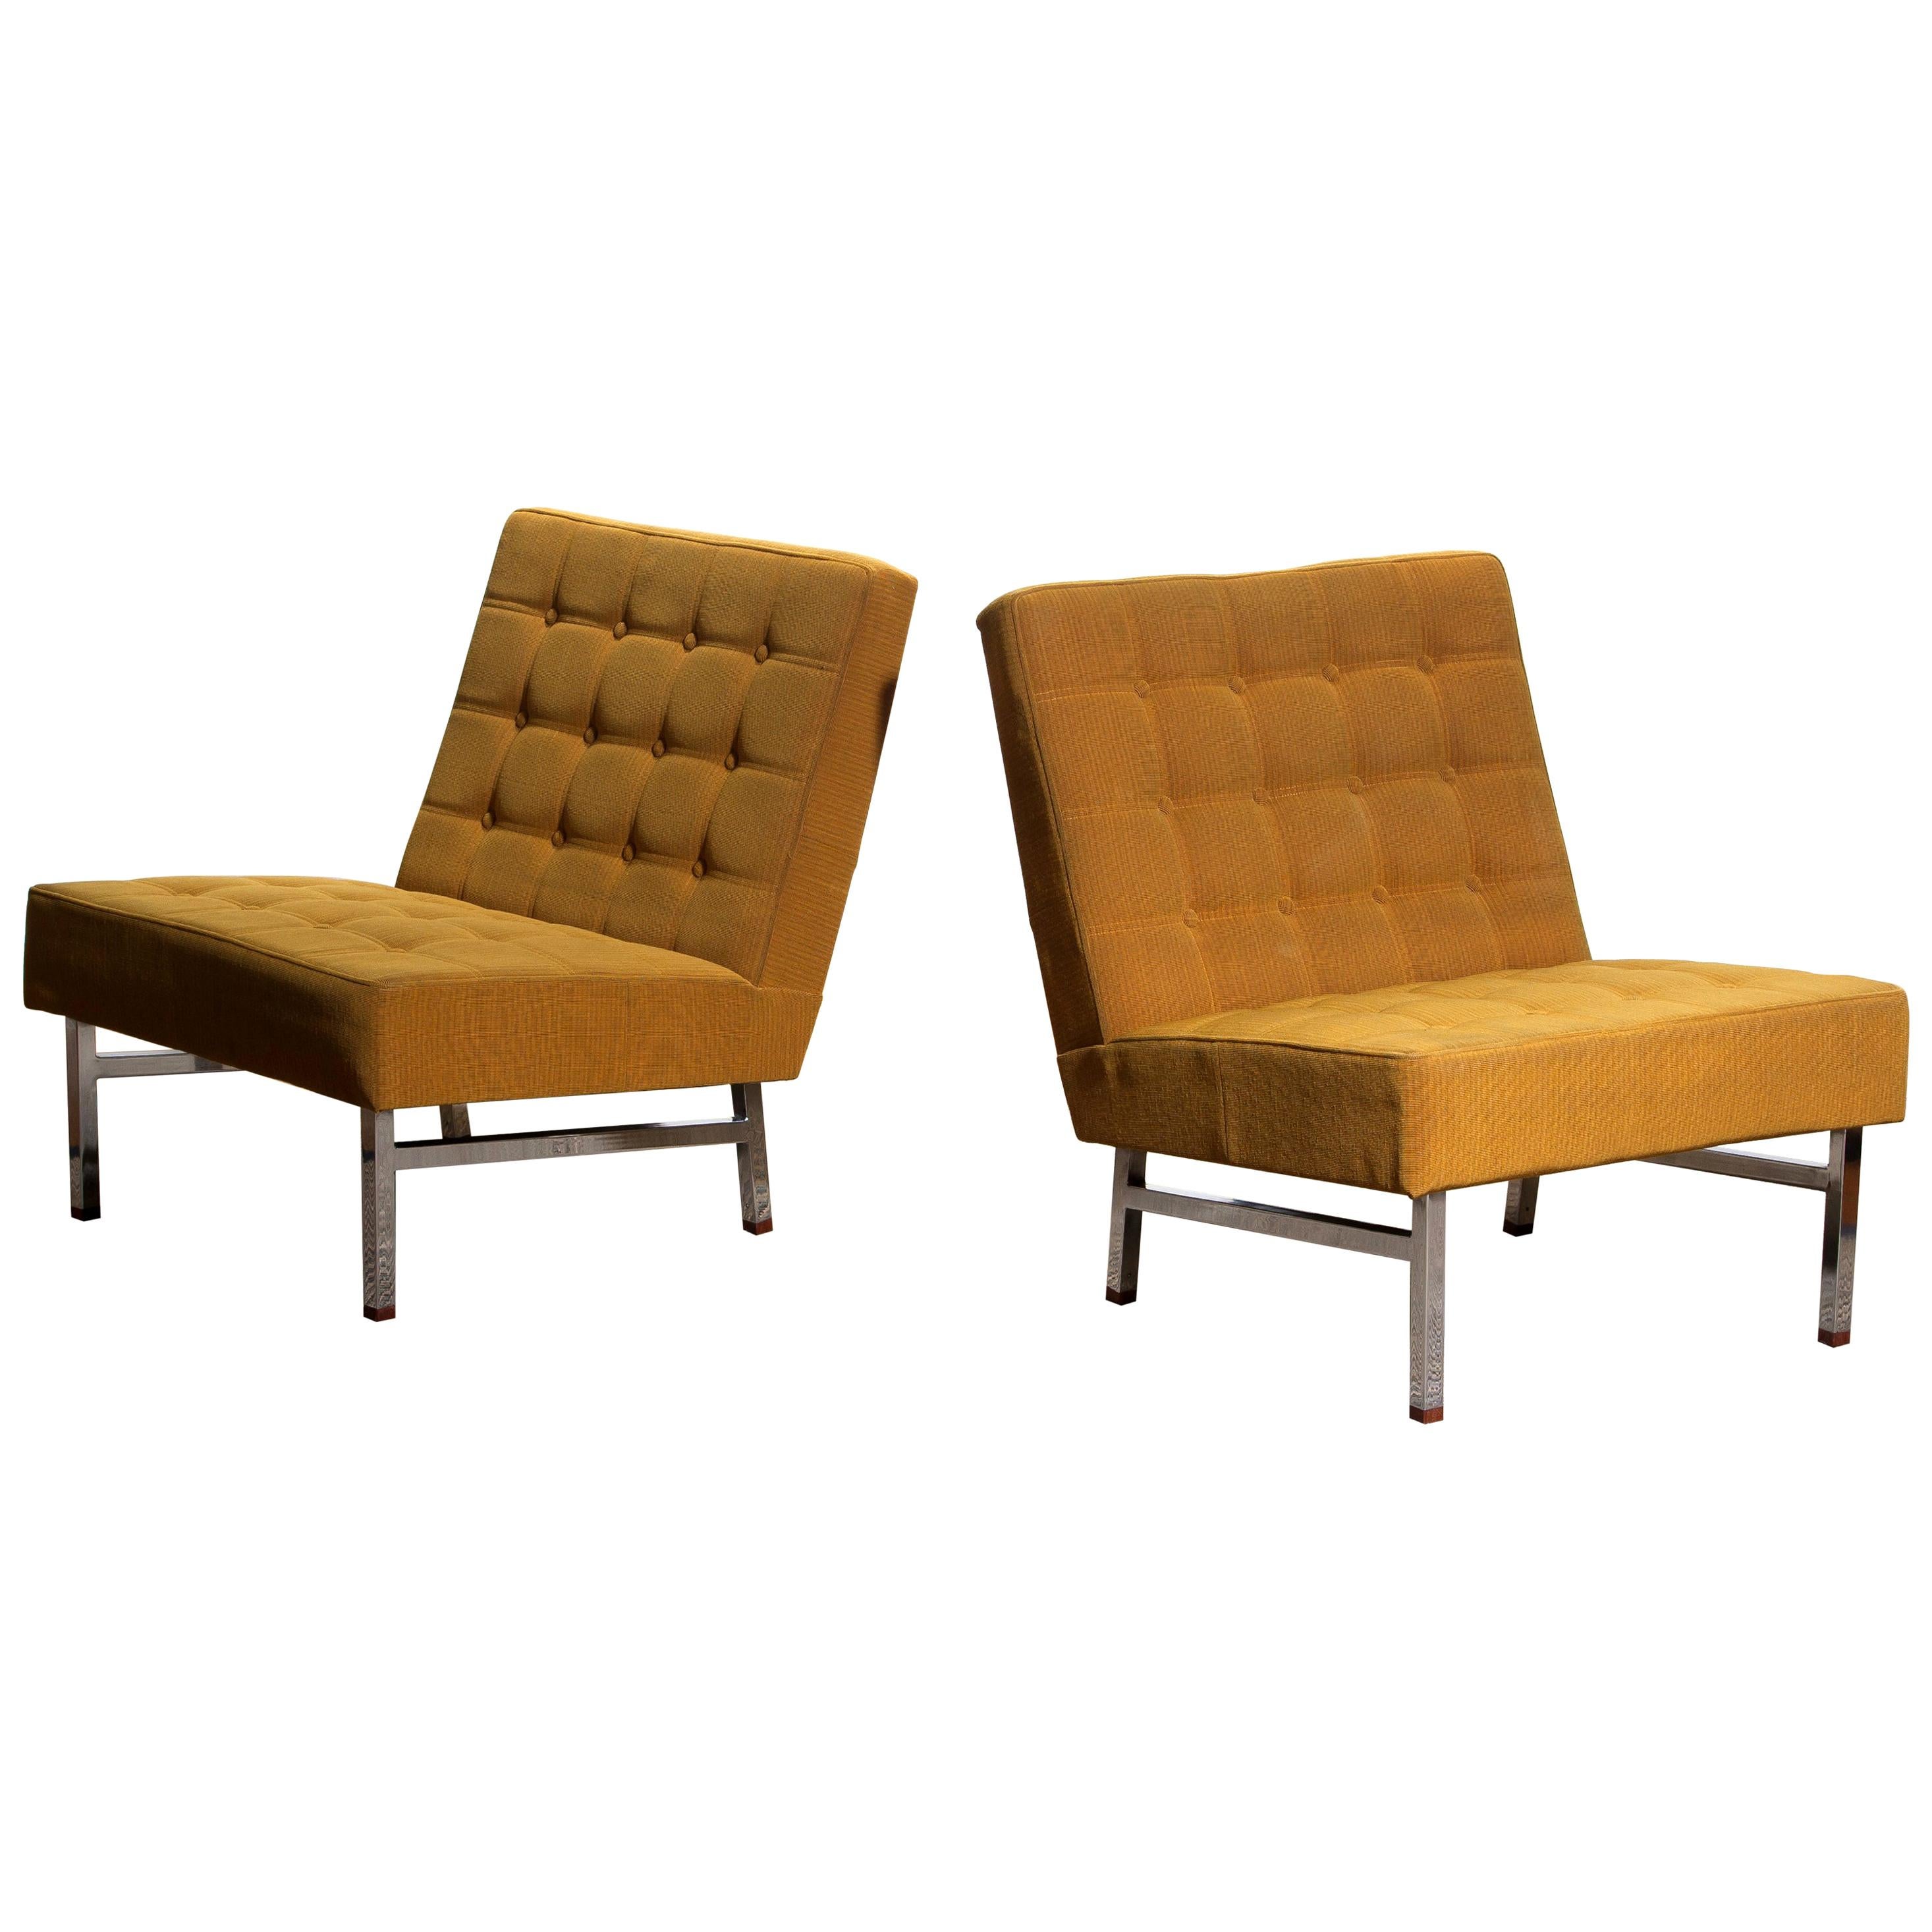 1960s Pair of Lounge or Easy Chairs by Karl Erik Ekselius for JOC Möbler, Sweden In Good Condition In Silvolde, Gelderland